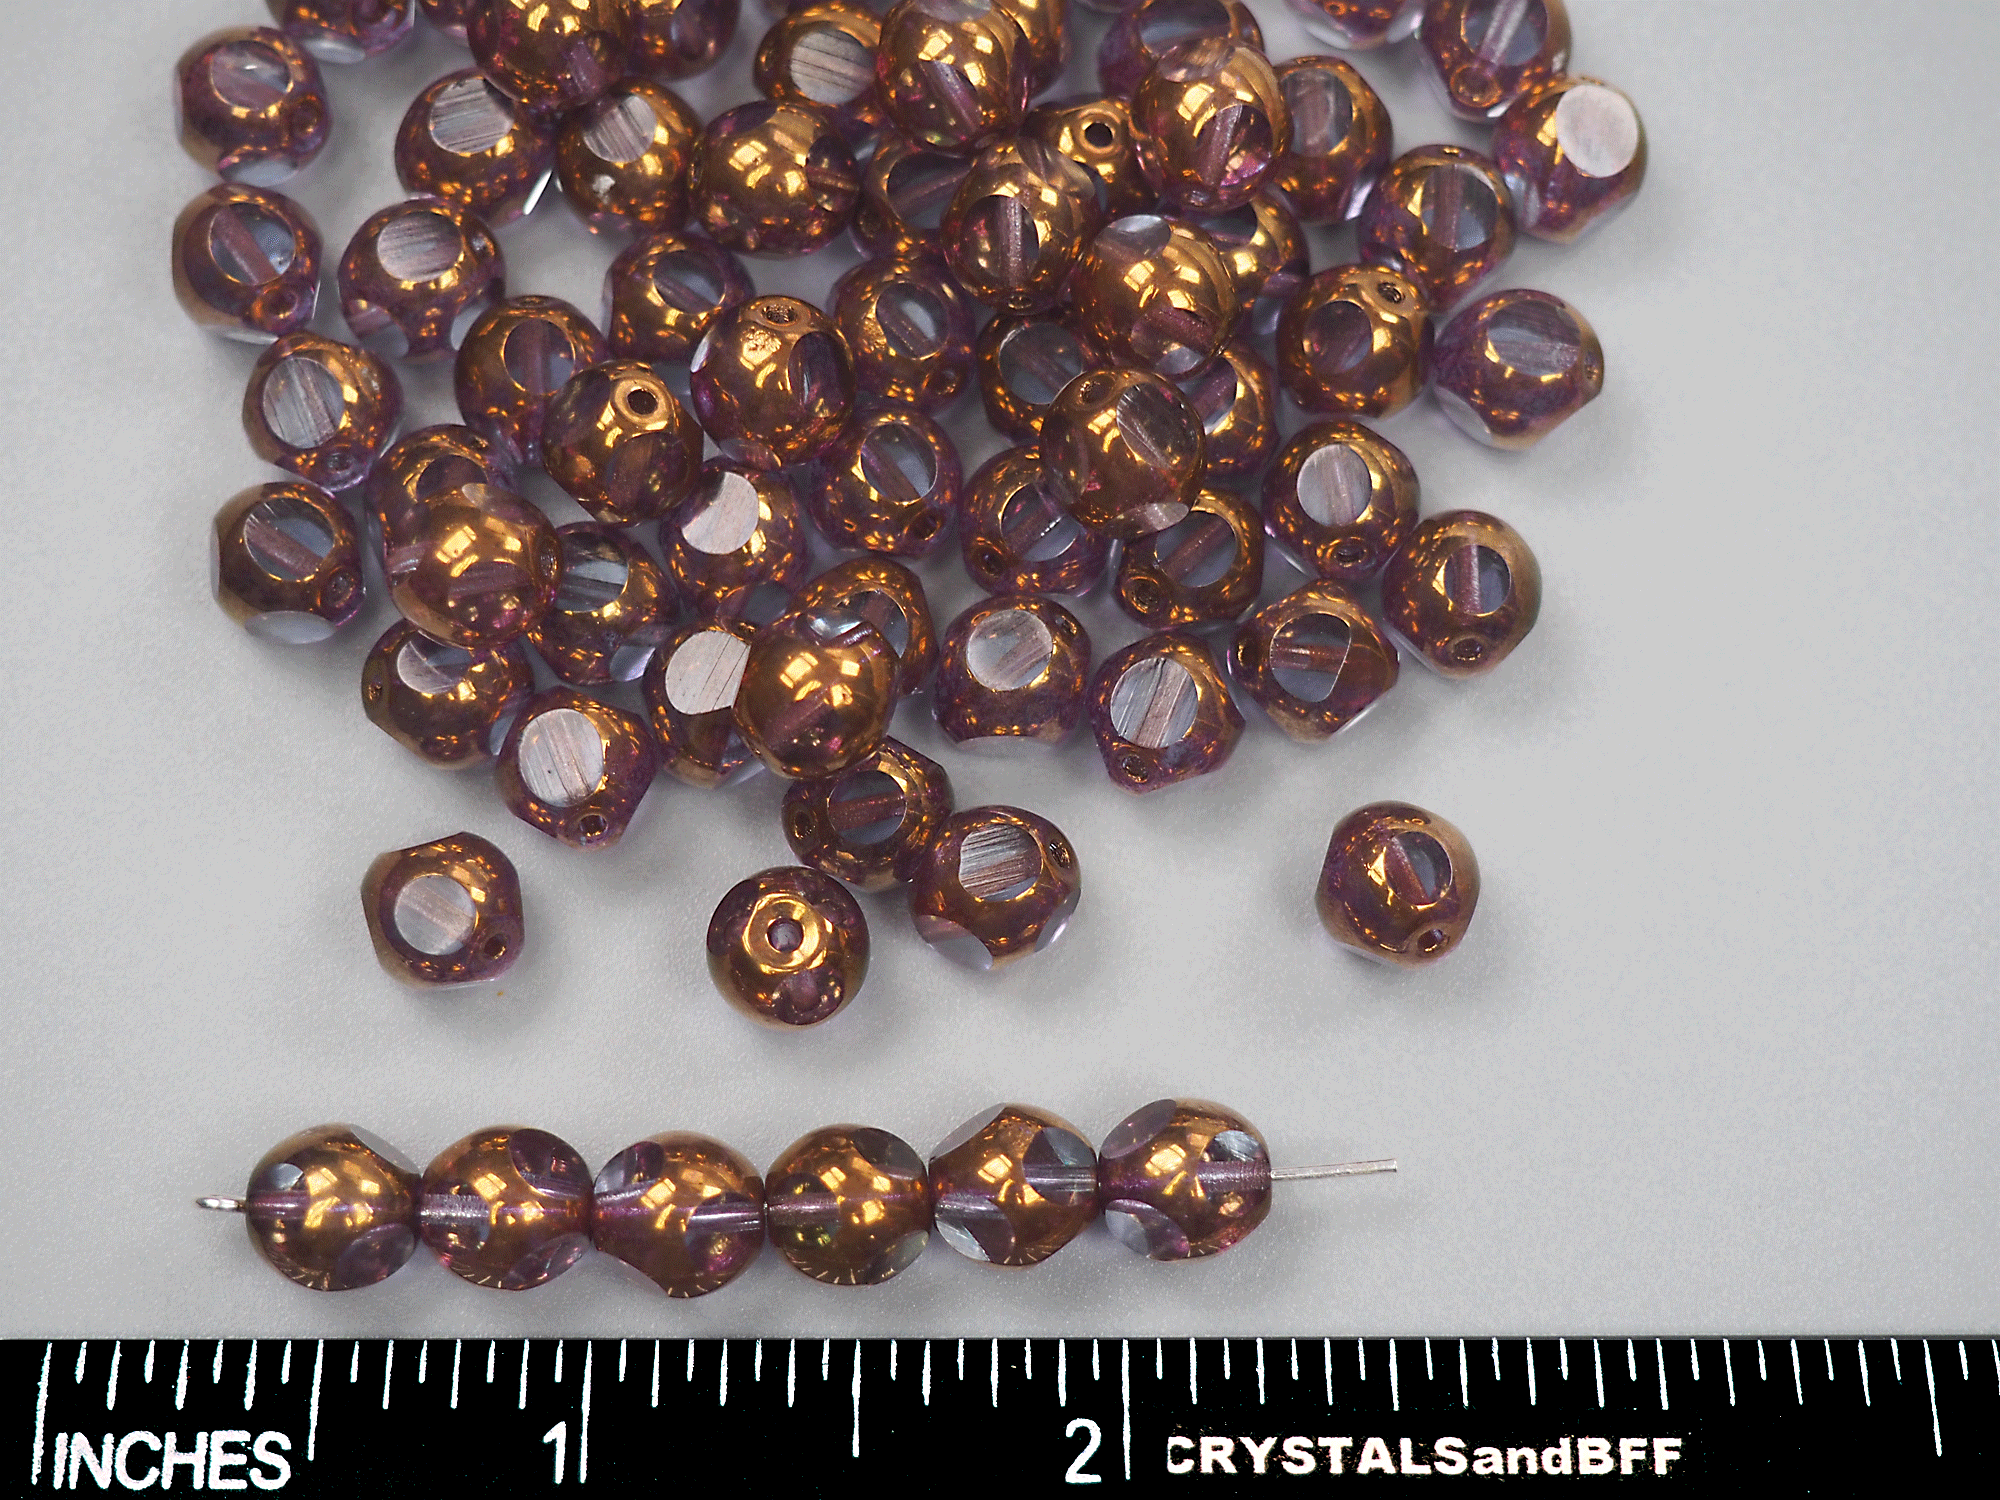 Czech Glass 5-Cut Round Window Beads (Soccer Ball Bead) in size 8mm, Light Purple Bronze coated, 36pcs, P885